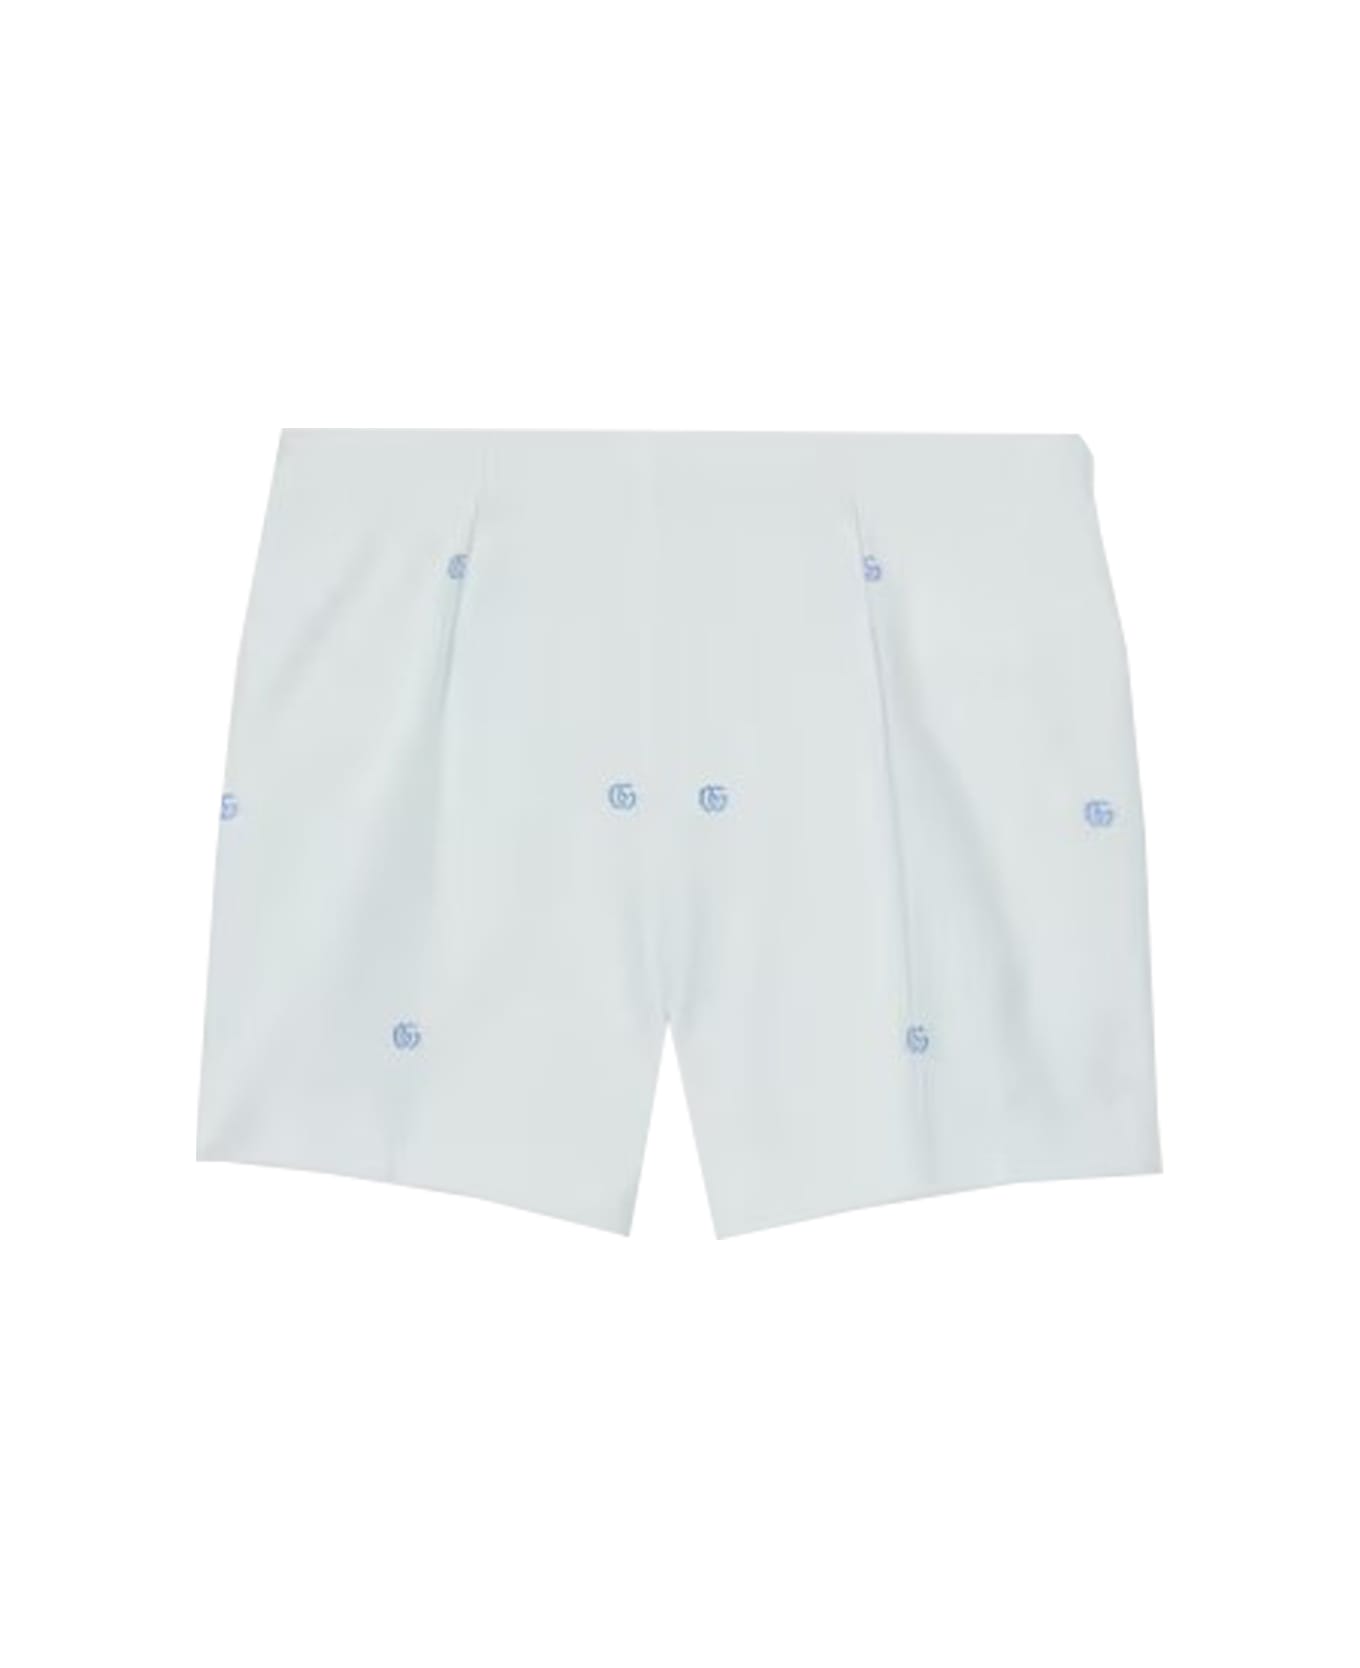 gucci stud Shorts - Light blue